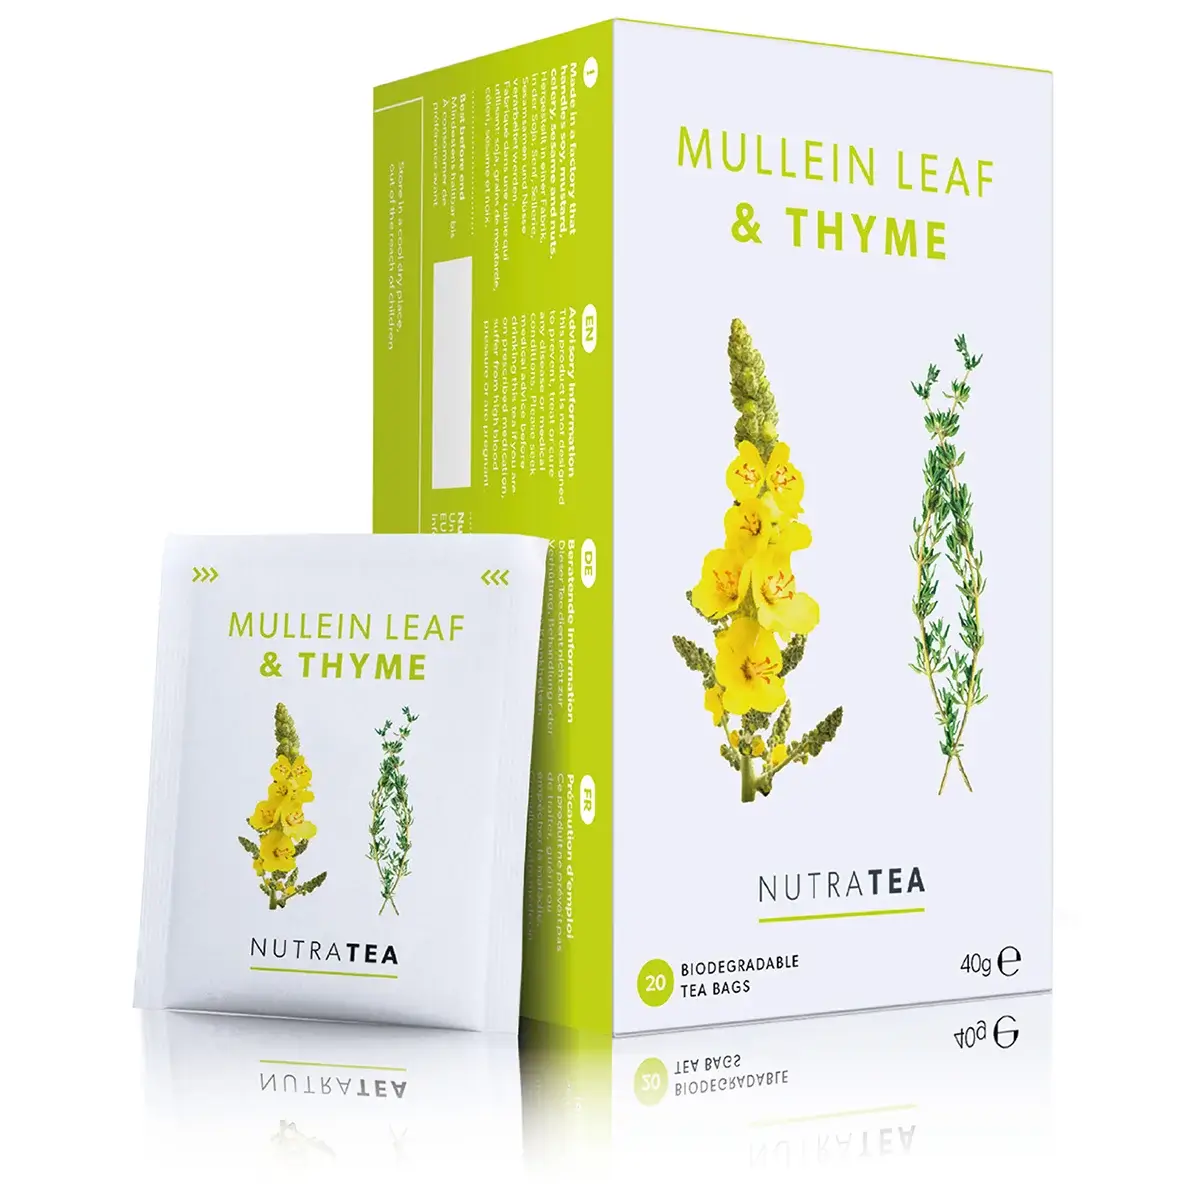 Mullein Leaf & Thyme Tea - Herbal Tea - 20 Biodegradable Tea Bags